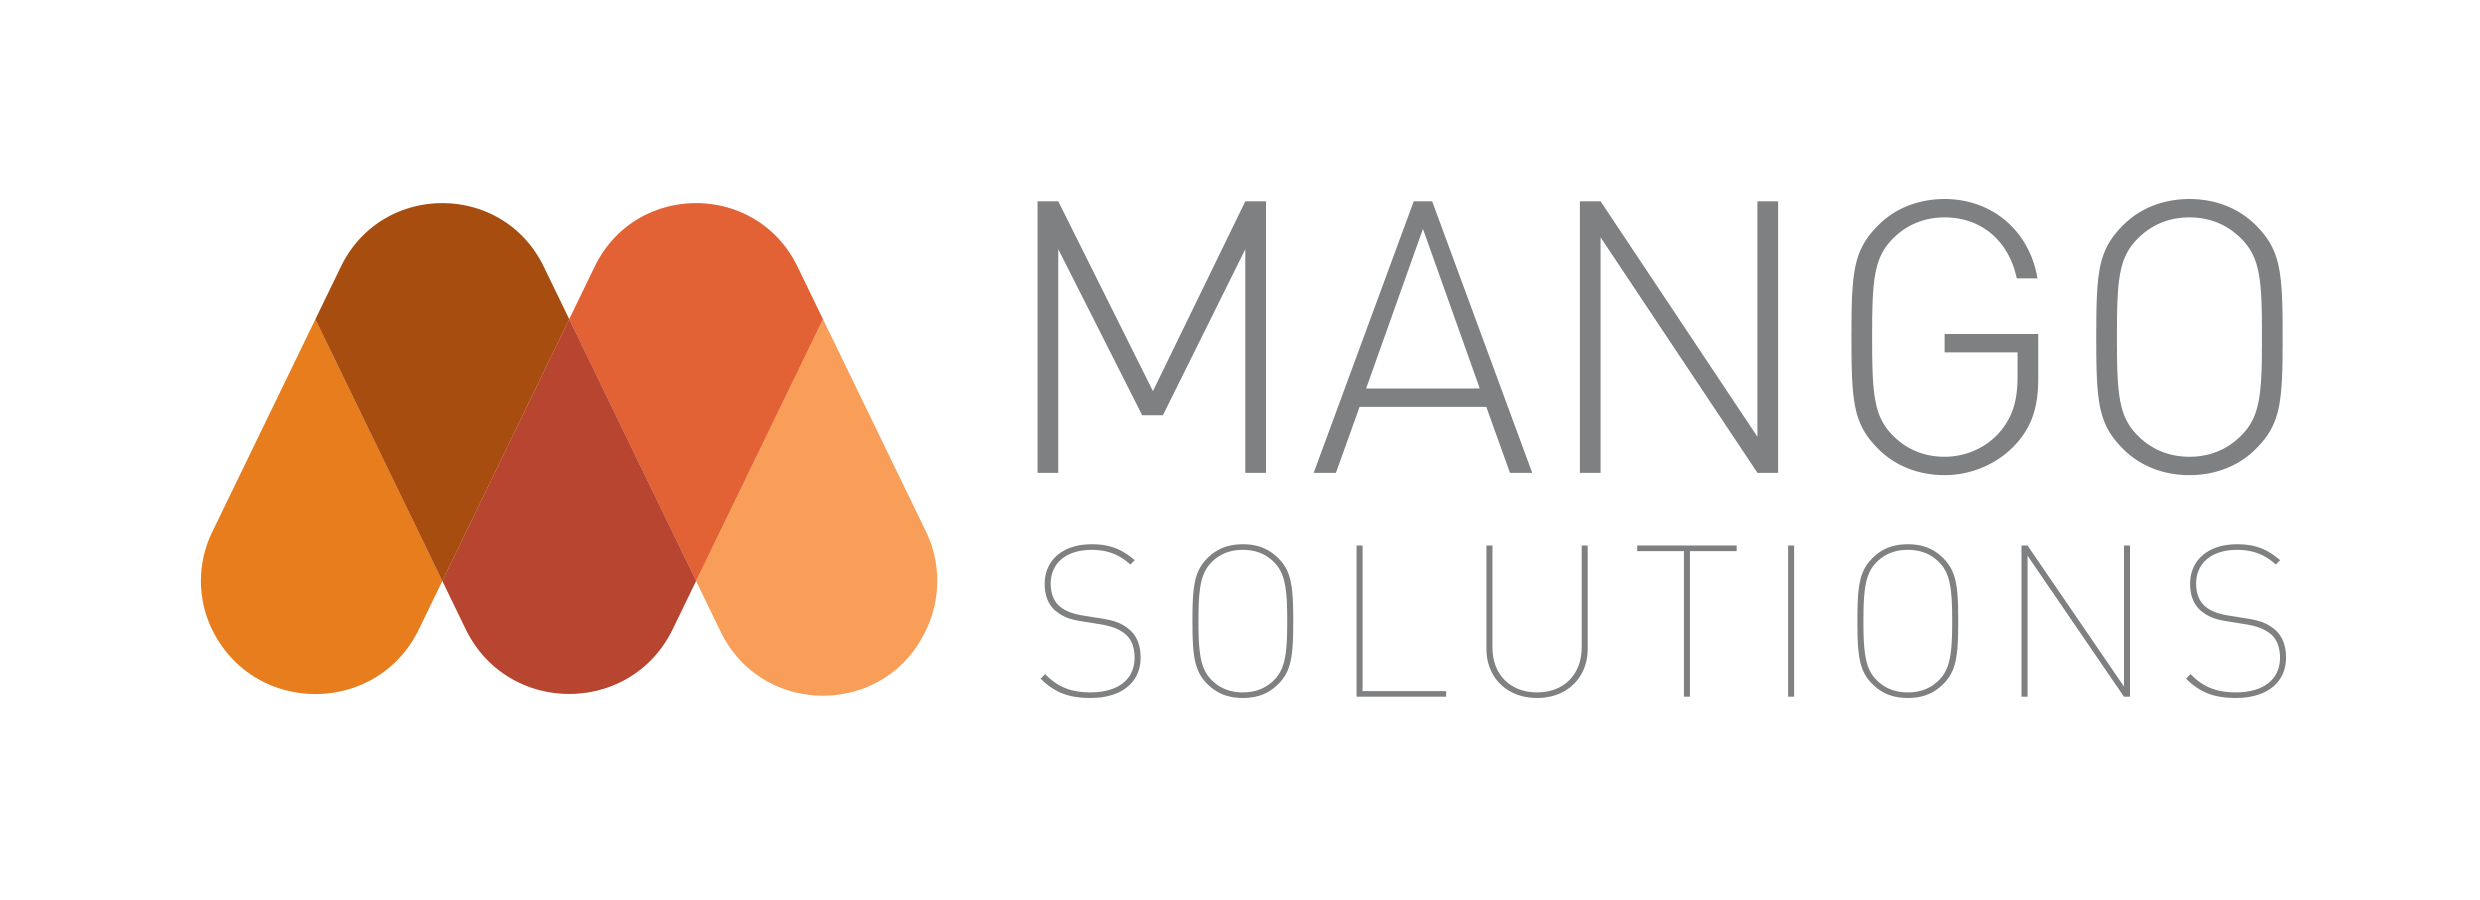 Mango Solutions name